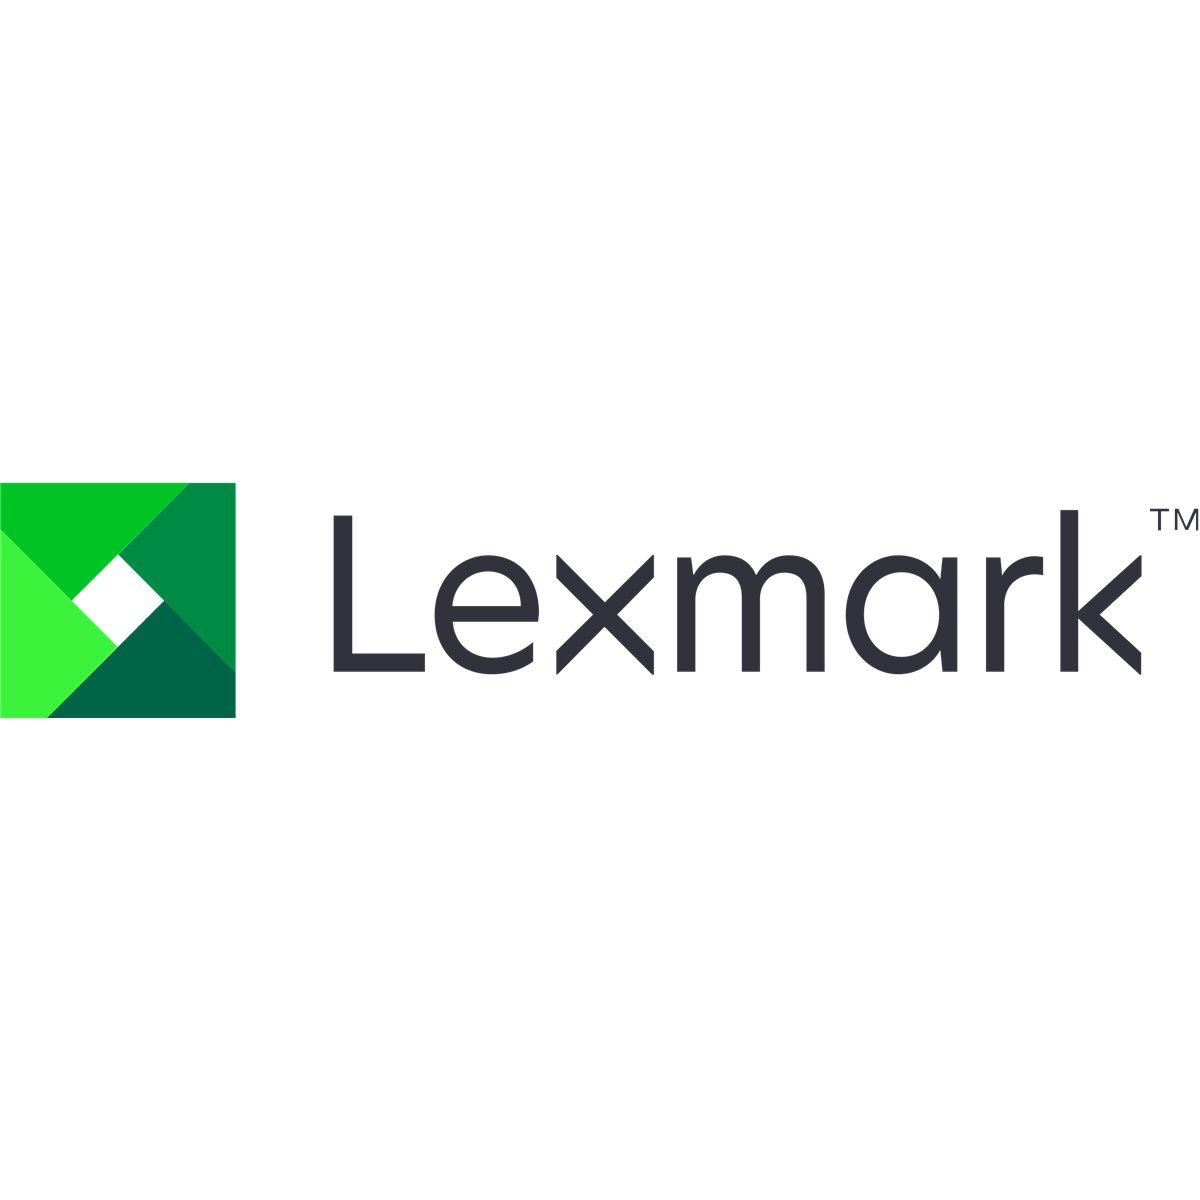 Lexmark SVC Power Supply Charge roller Hvps